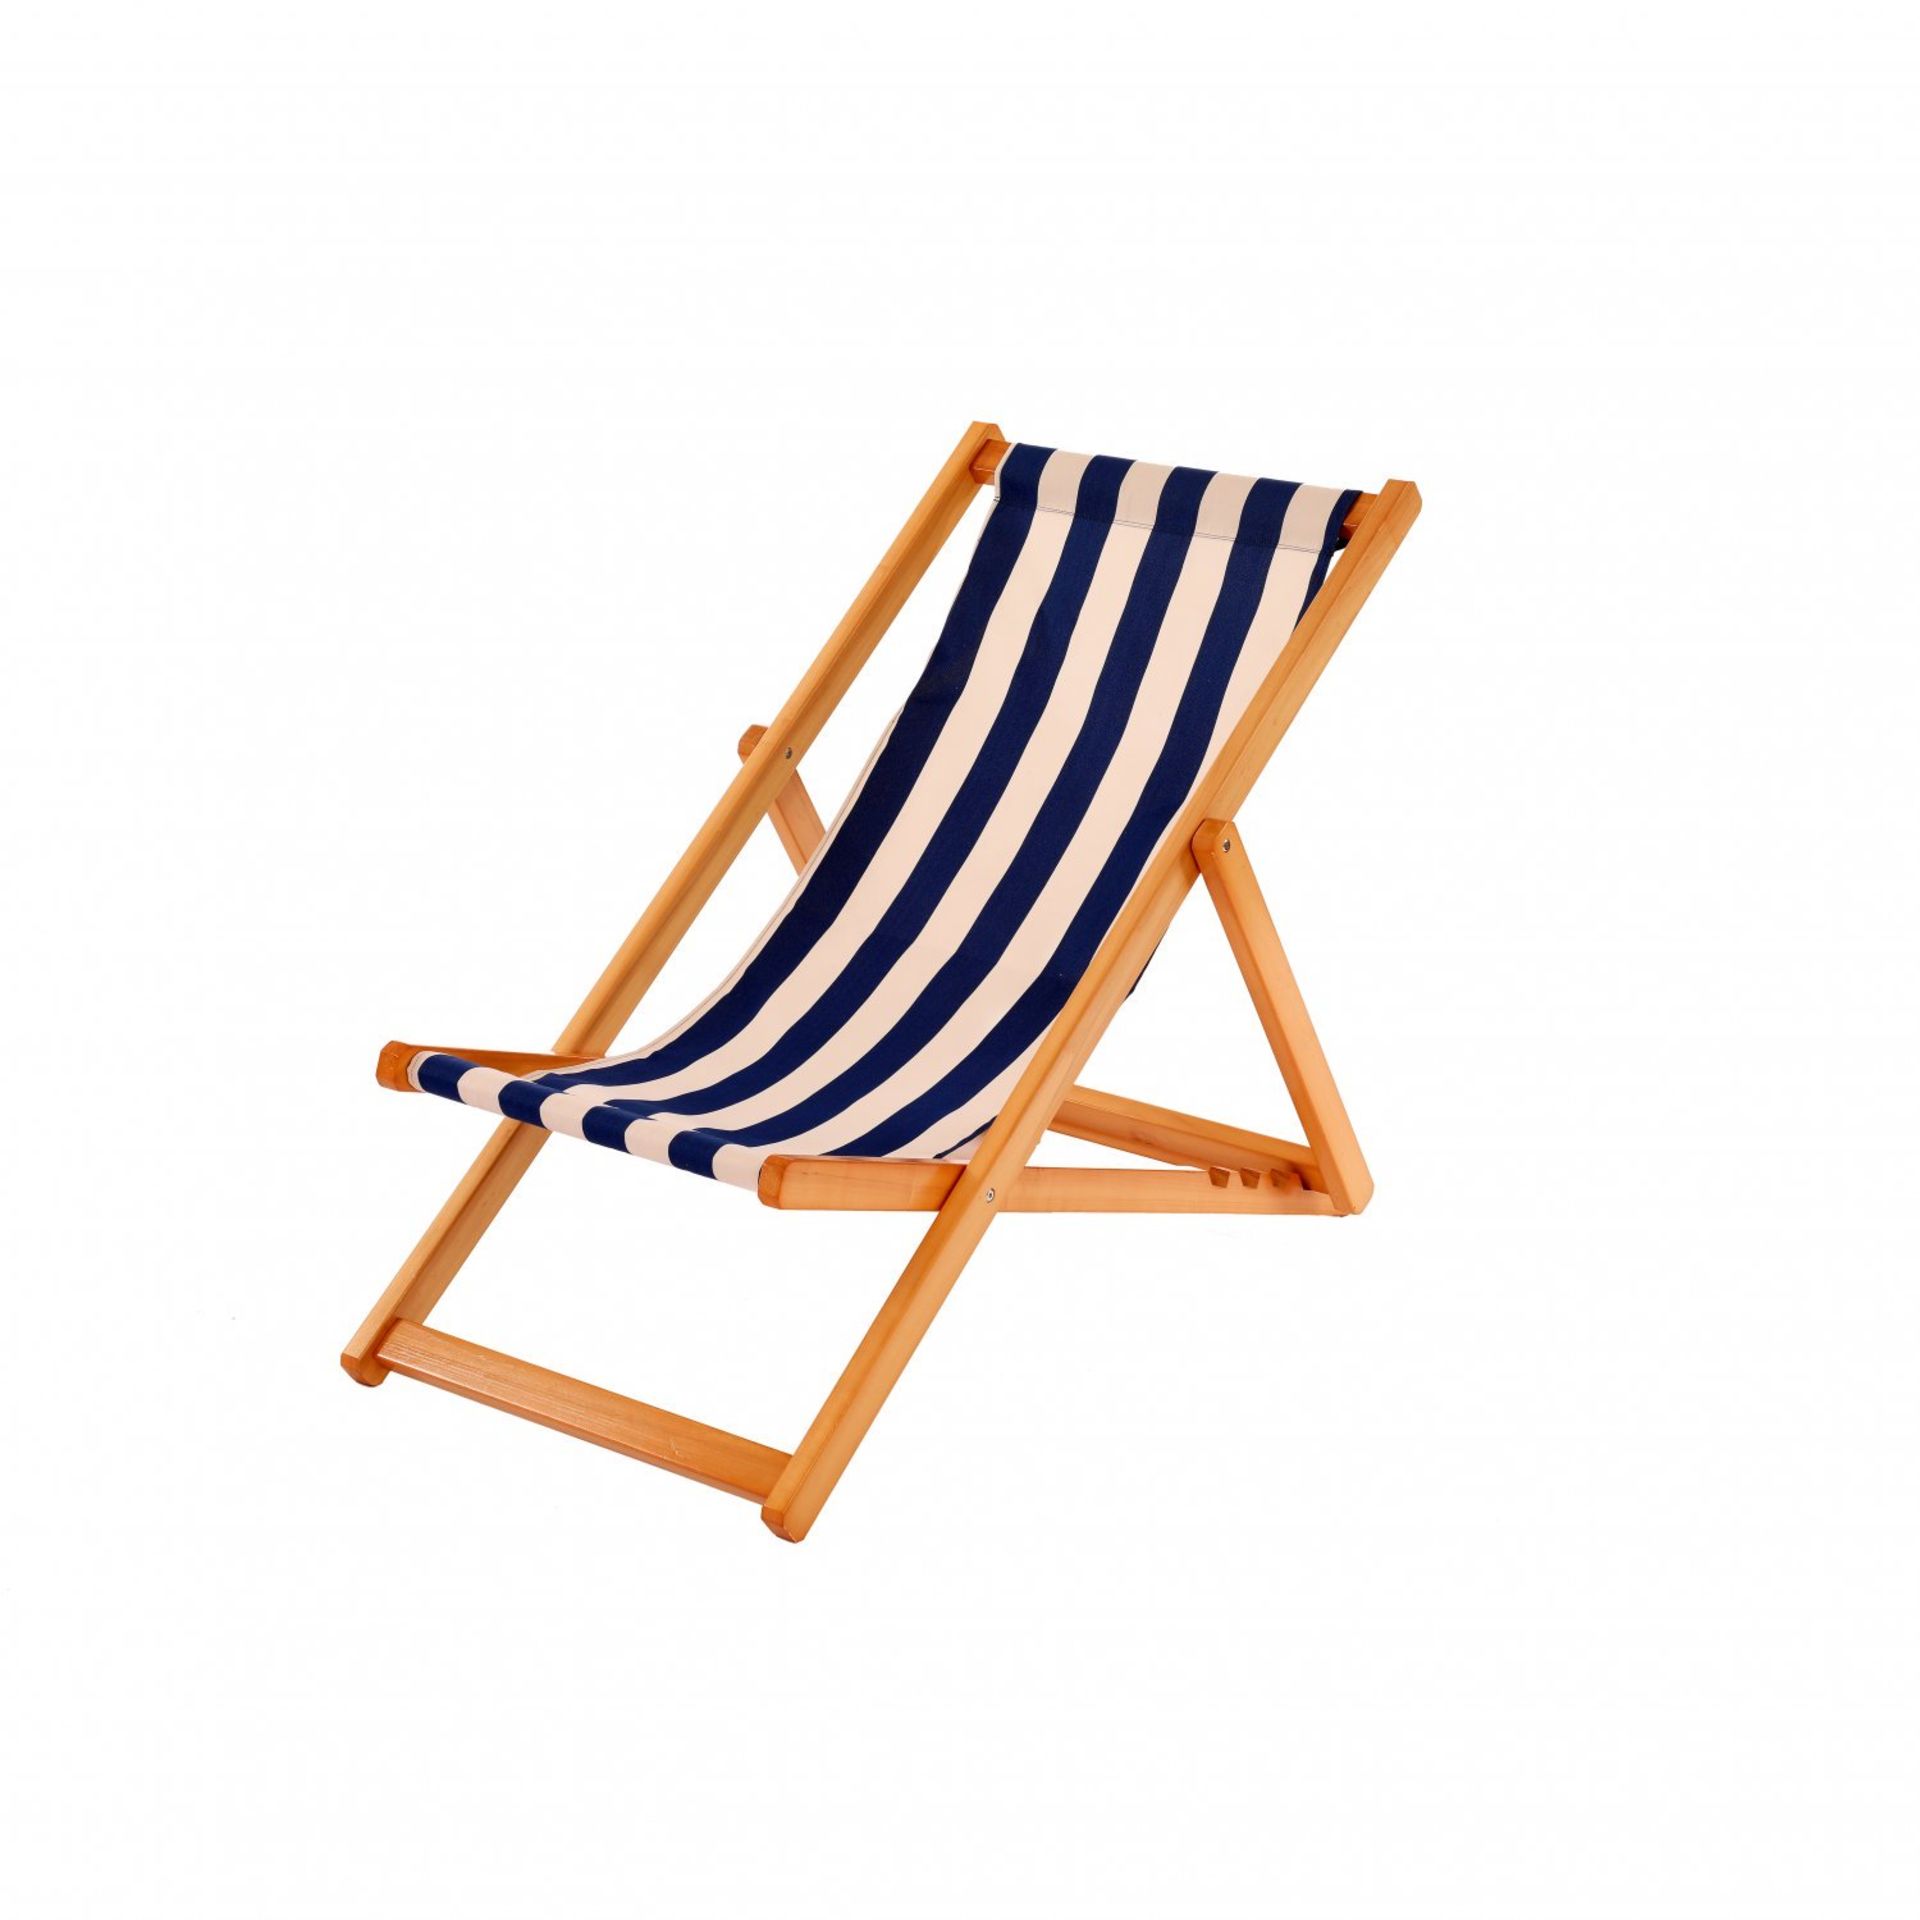 (KK29) Folding Hardwood Garden or Beach Deck Chairs Deckchair Relax this summer with ou... - Image 2 of 2